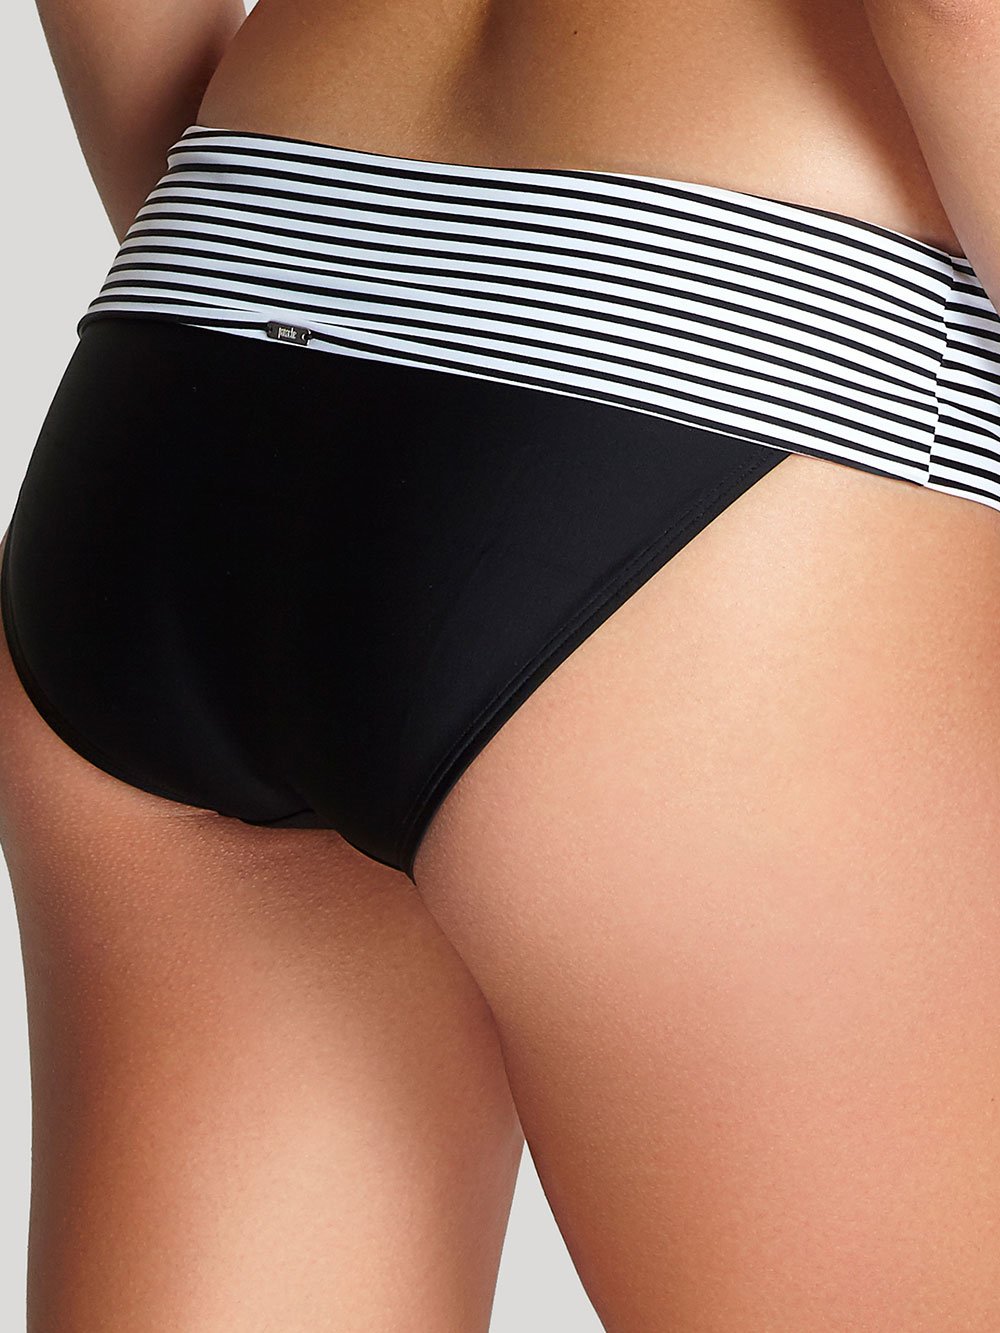 Panache Swim Swimwear XS / pan_black_white Stripe Folded Bikini Bottom